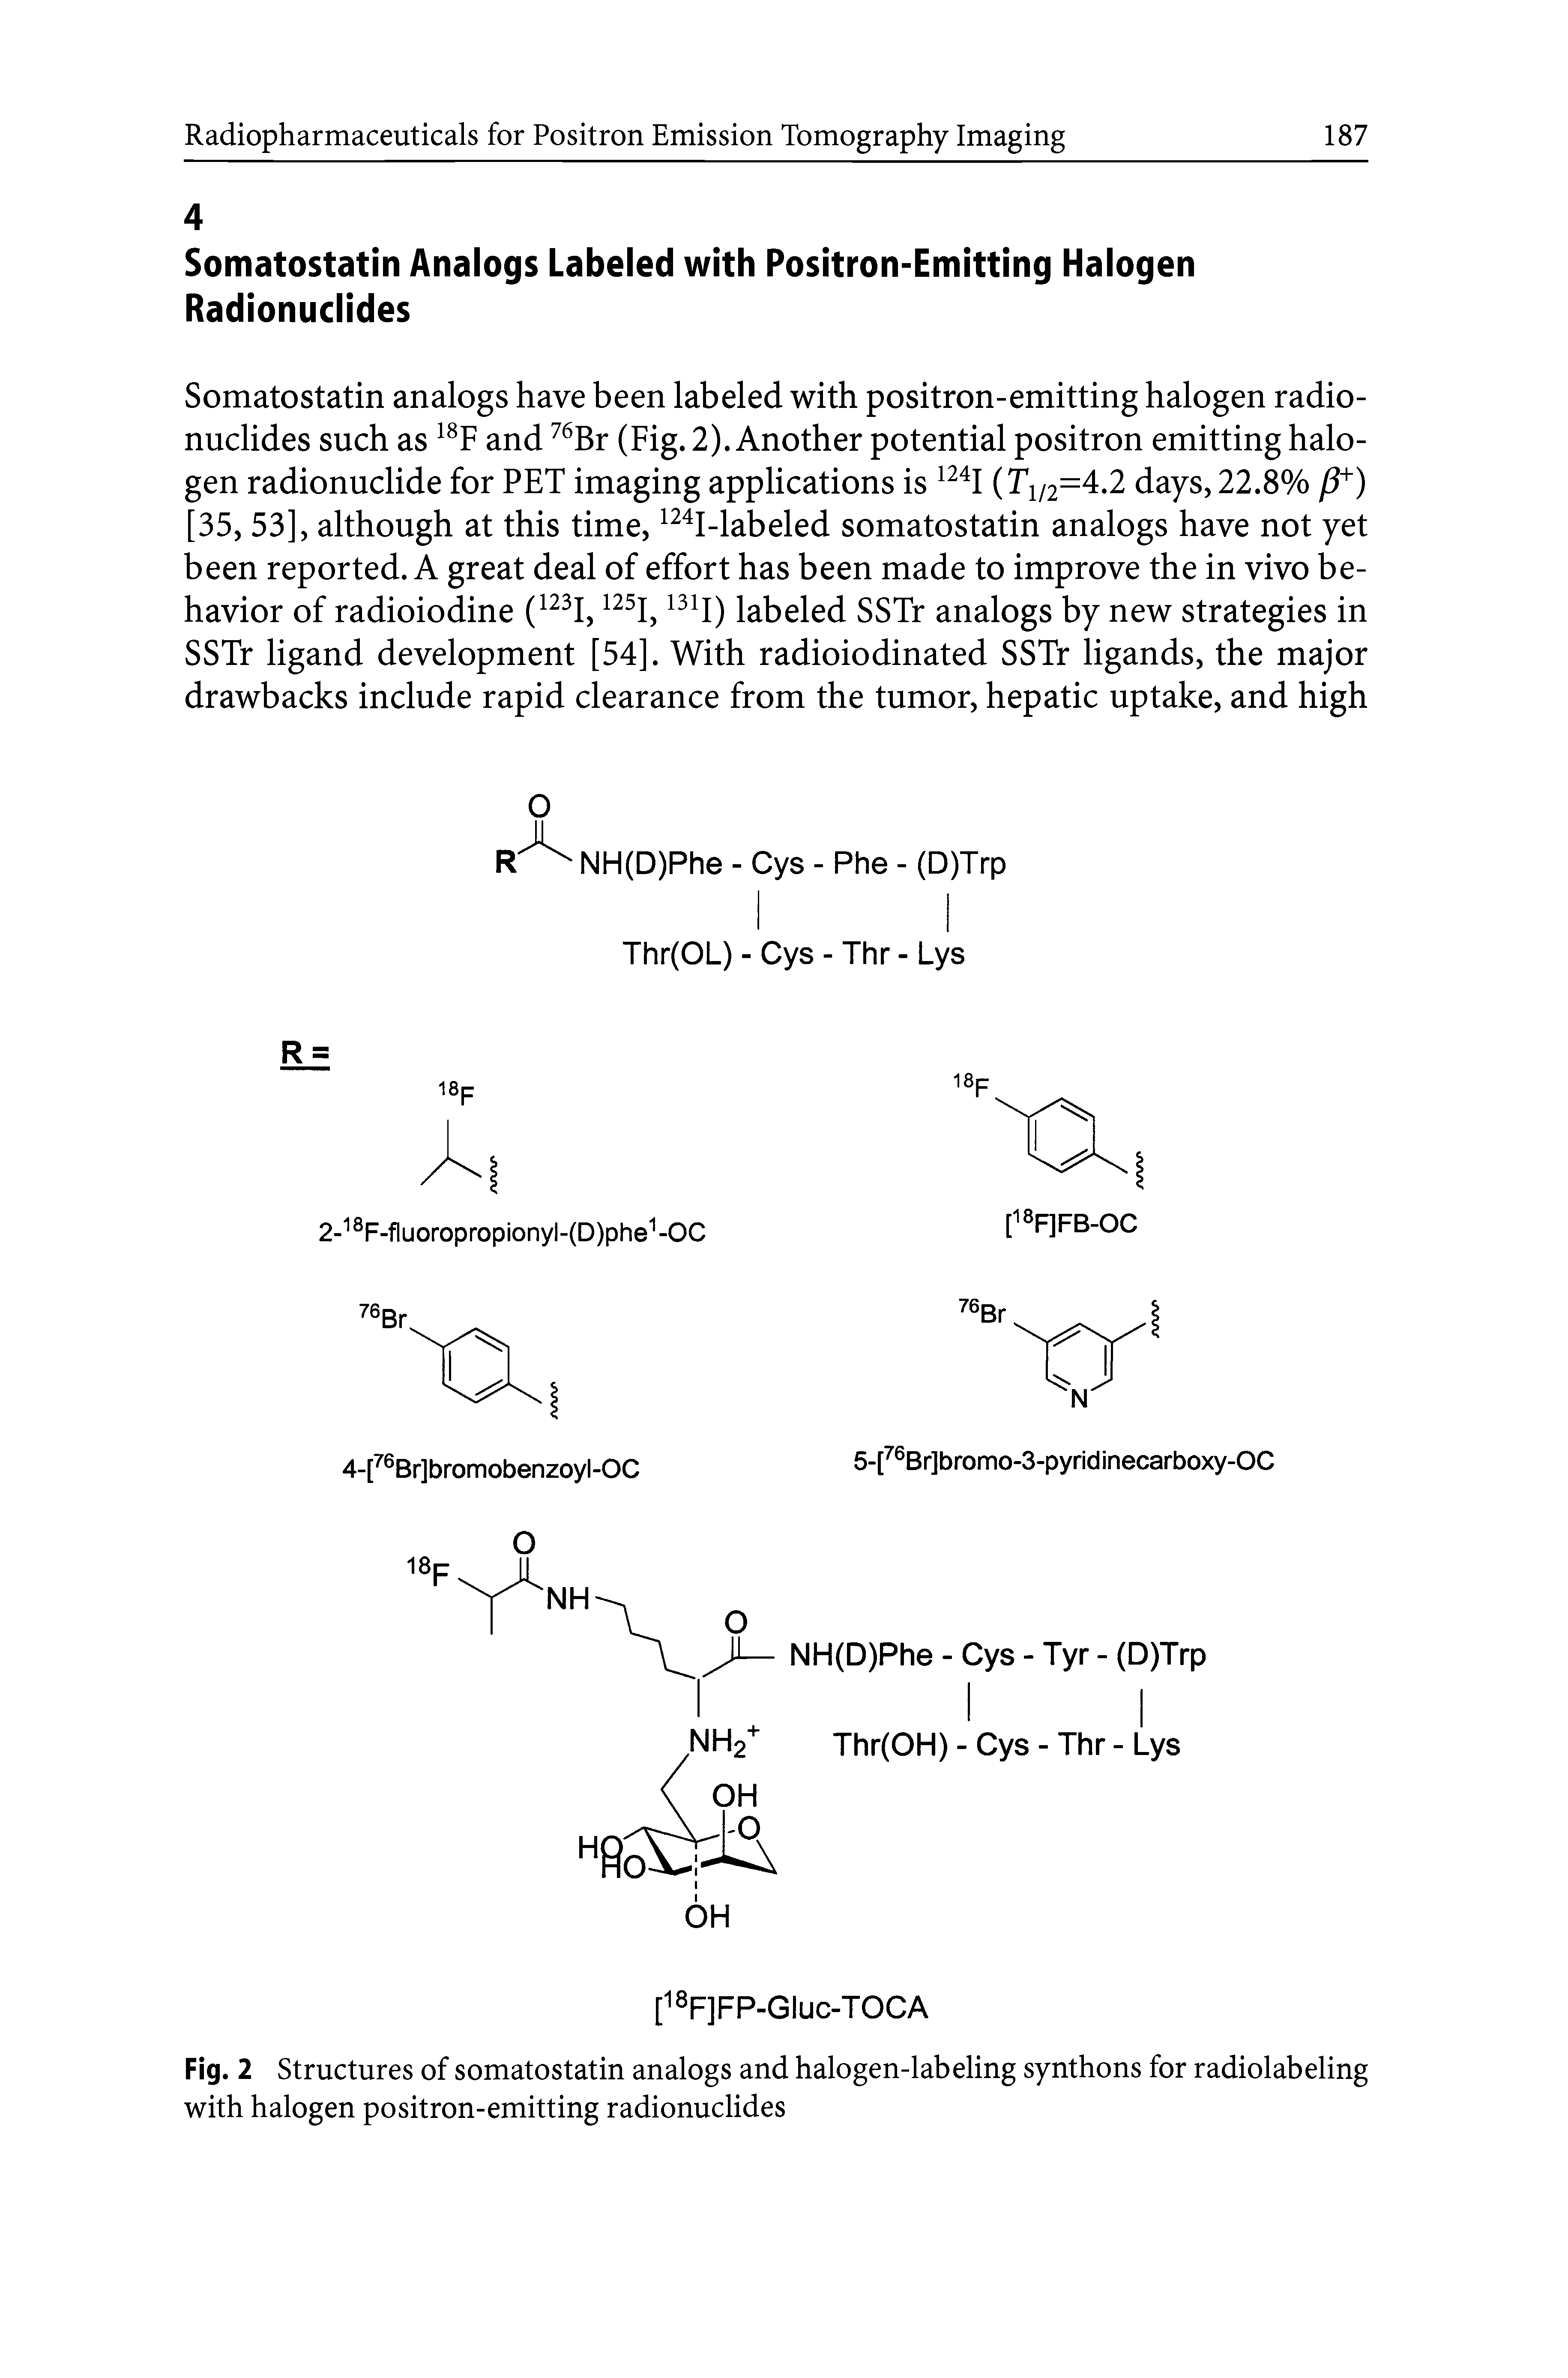 Fig. 2 Structures of somatostatin analogs and halogen-labeling synthons for radiolabeling with halogen positron-emitting radionuclides...